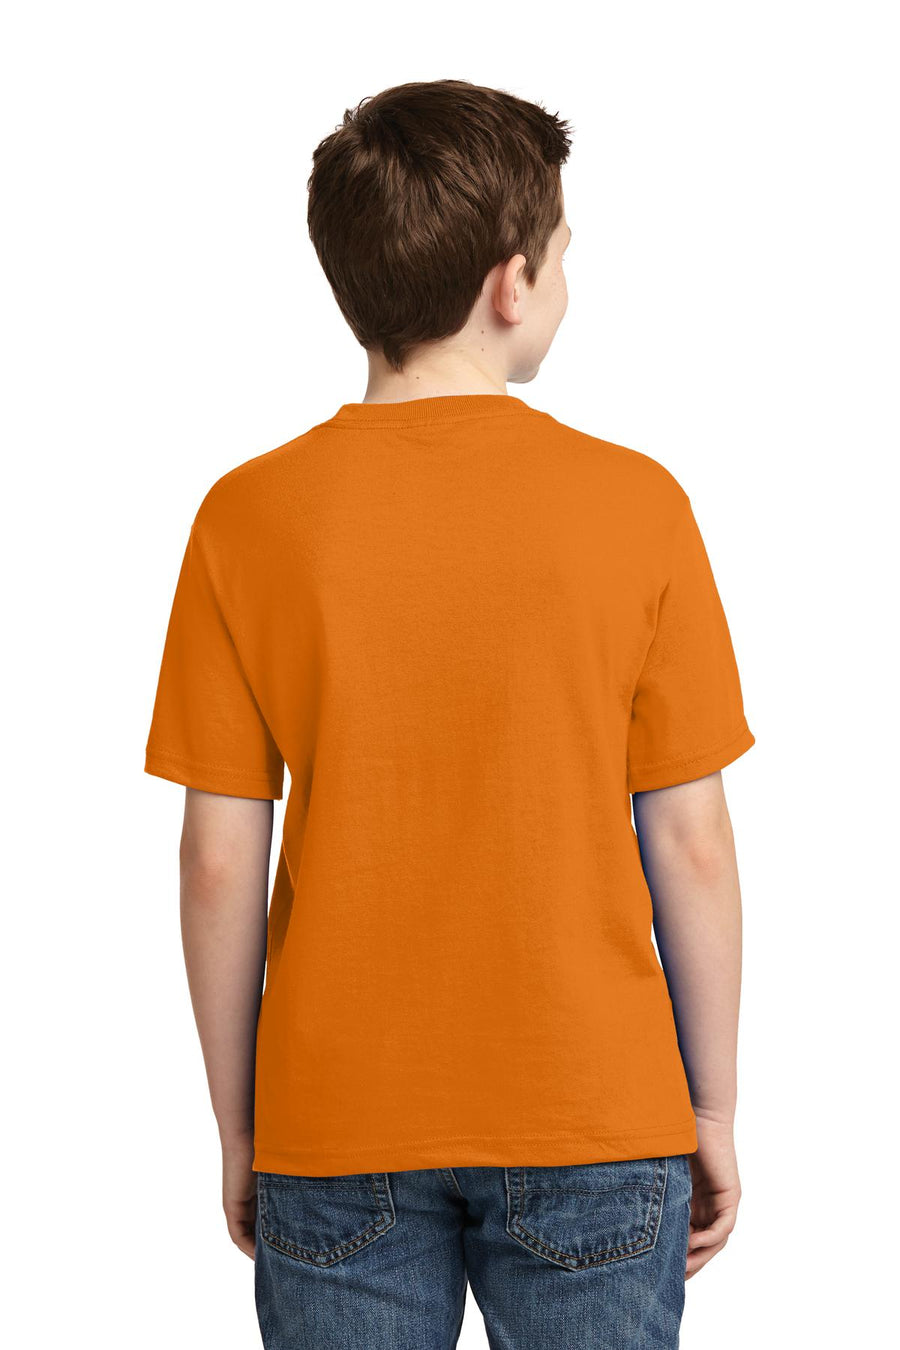 29B-Tennessee Orange-back_model